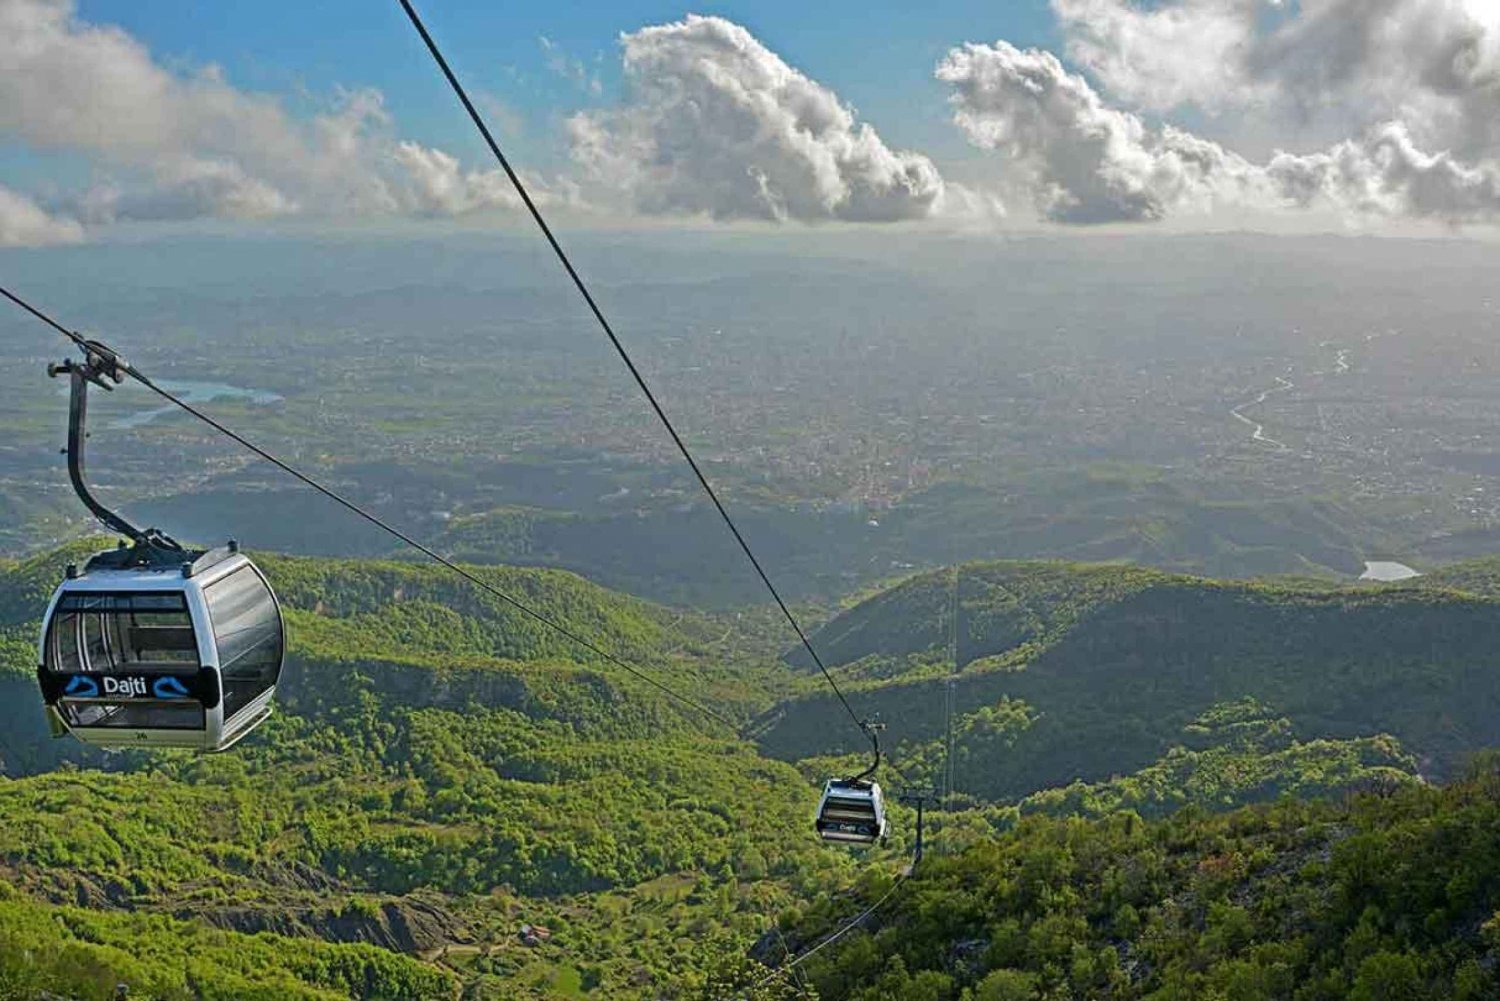 Tirana: Dagvullende tour met kabelbaan naar de berg Dajti